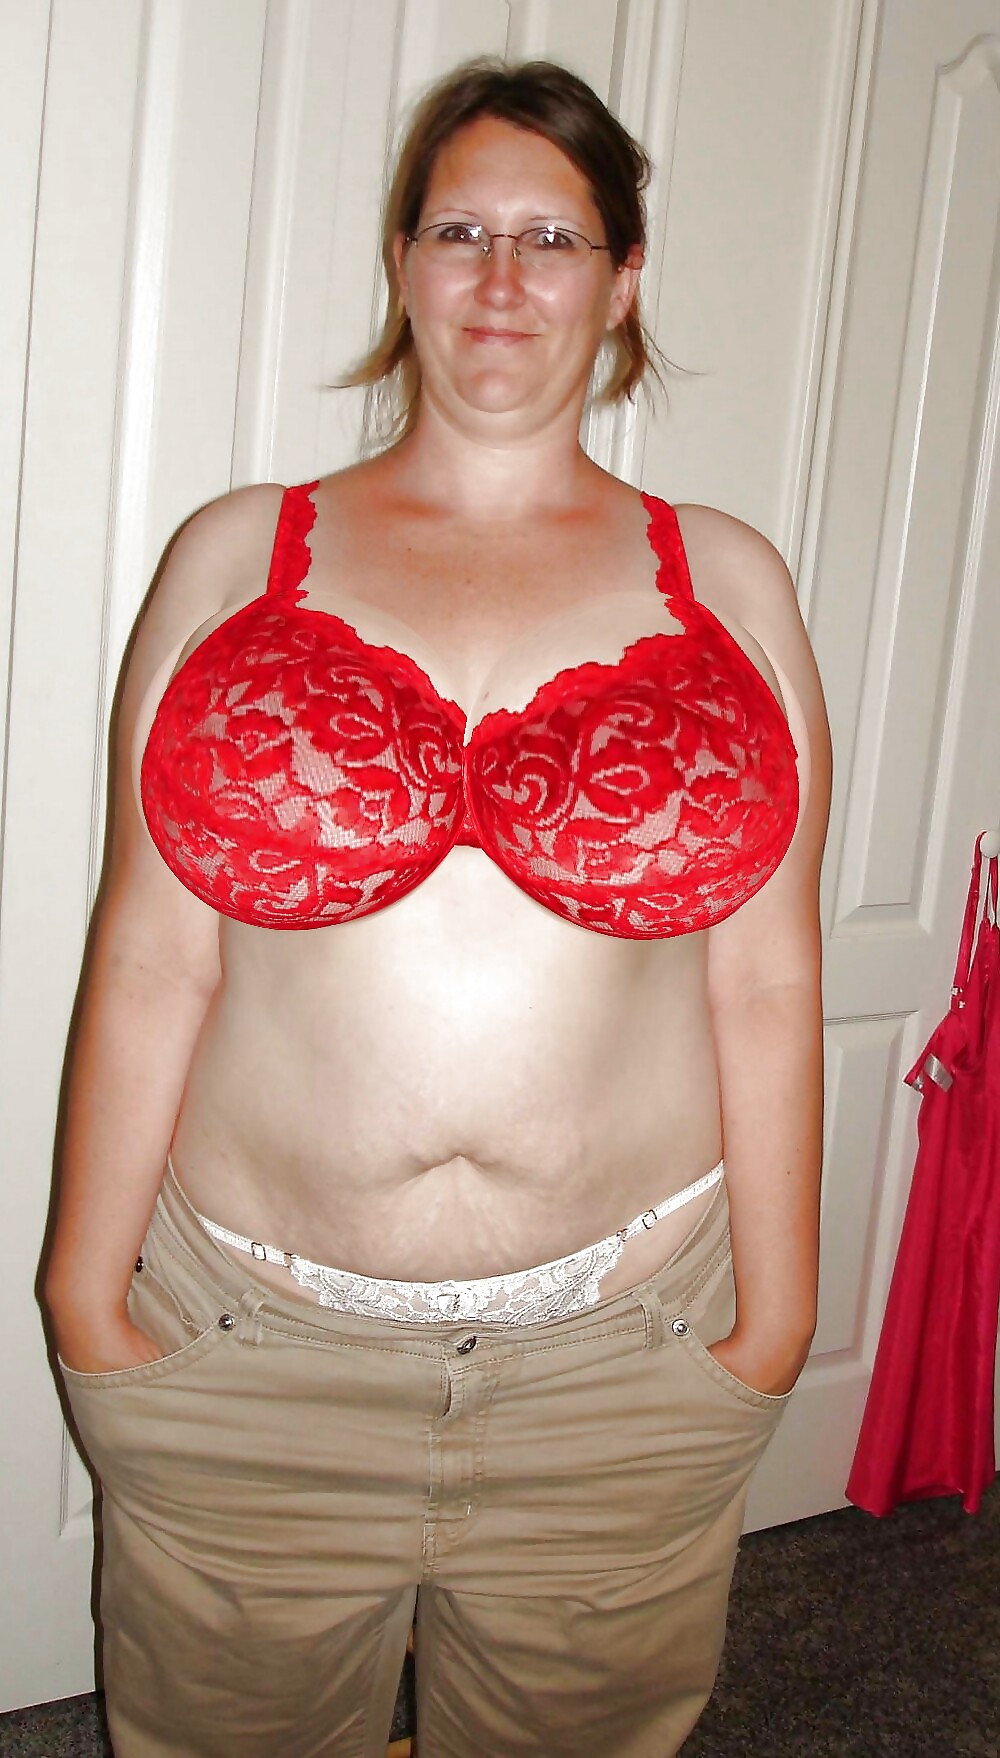 Big tits made bigger for more huge fun #22114412